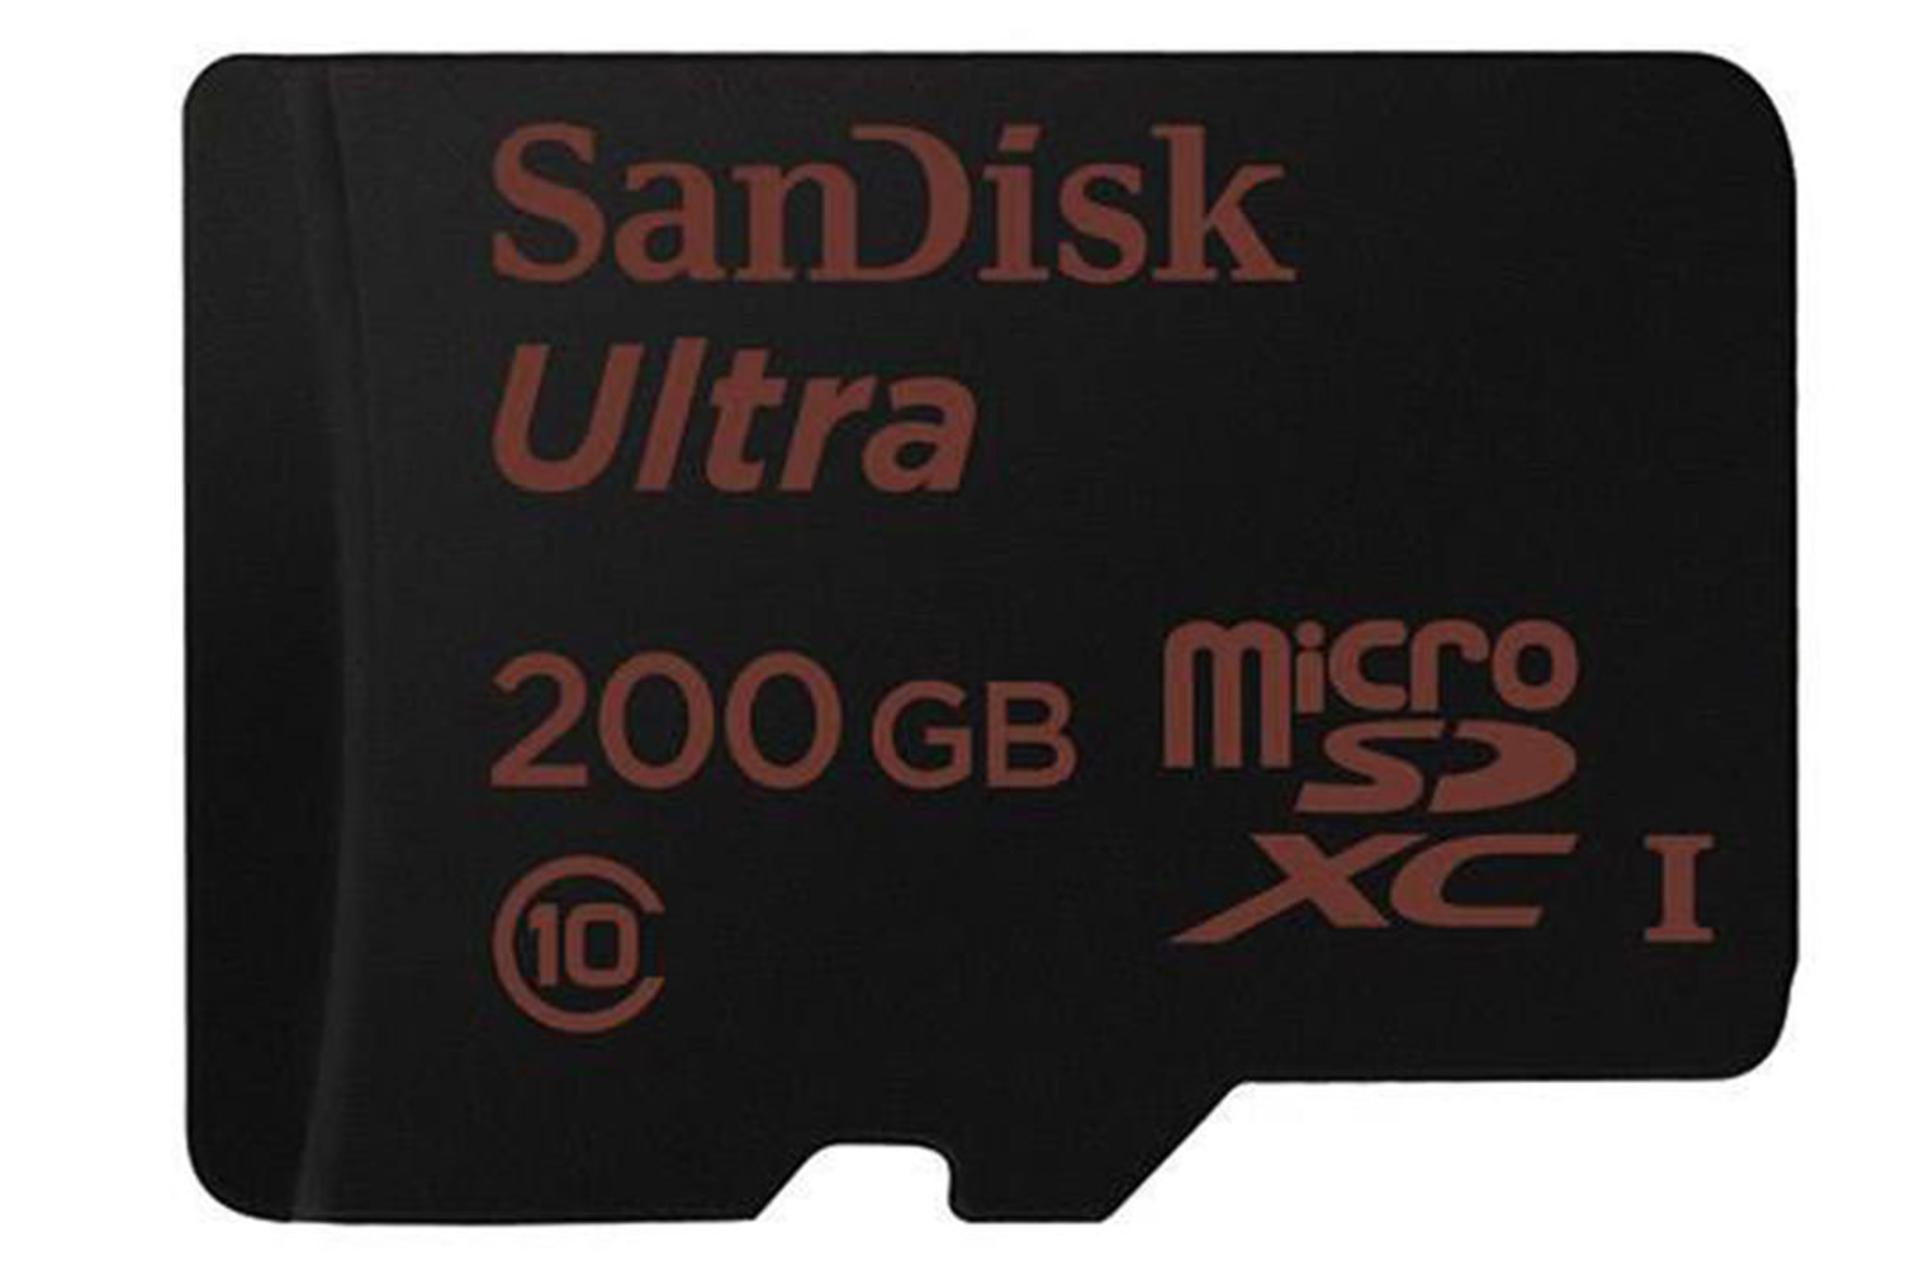 SanDisk Ultra microSDXC Class 10 UHS-I U1 200GB